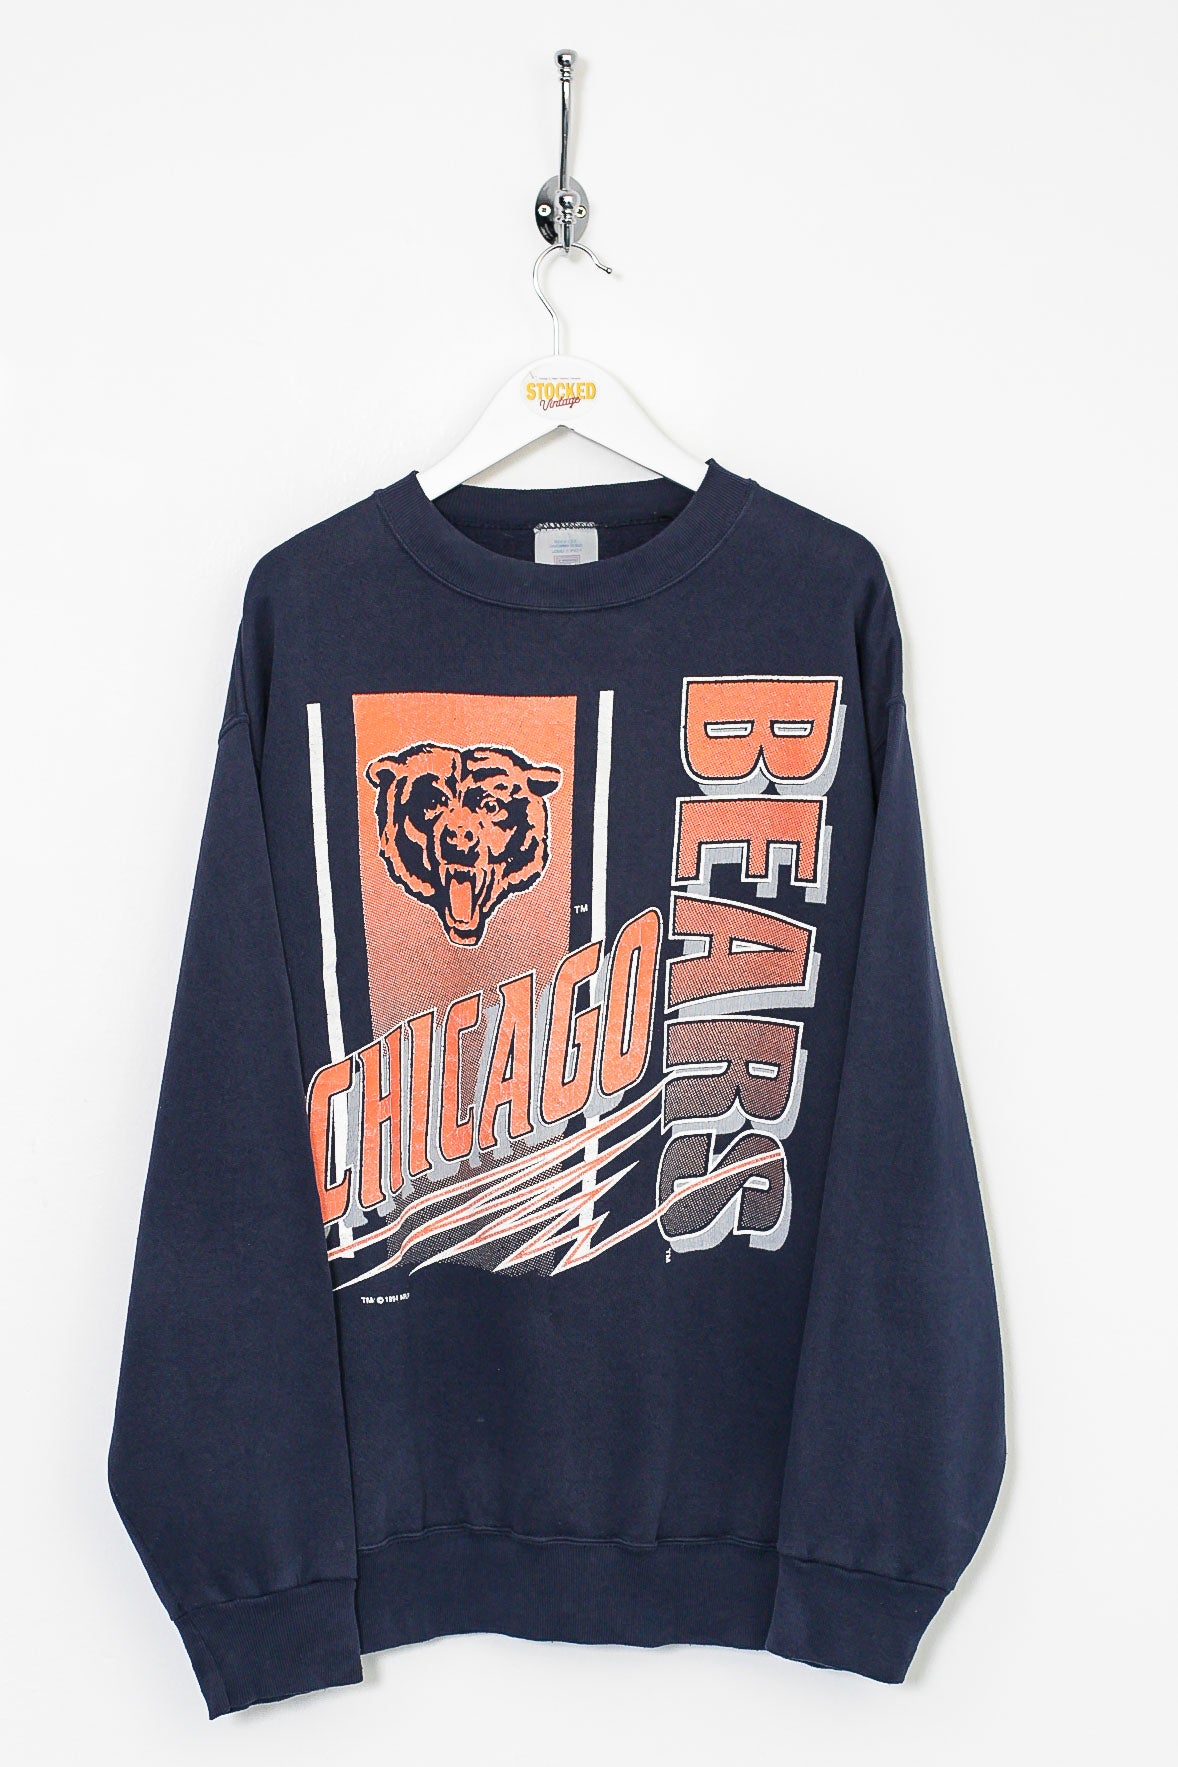 1994 NFL Chicago Bears Sweatshirt (M)